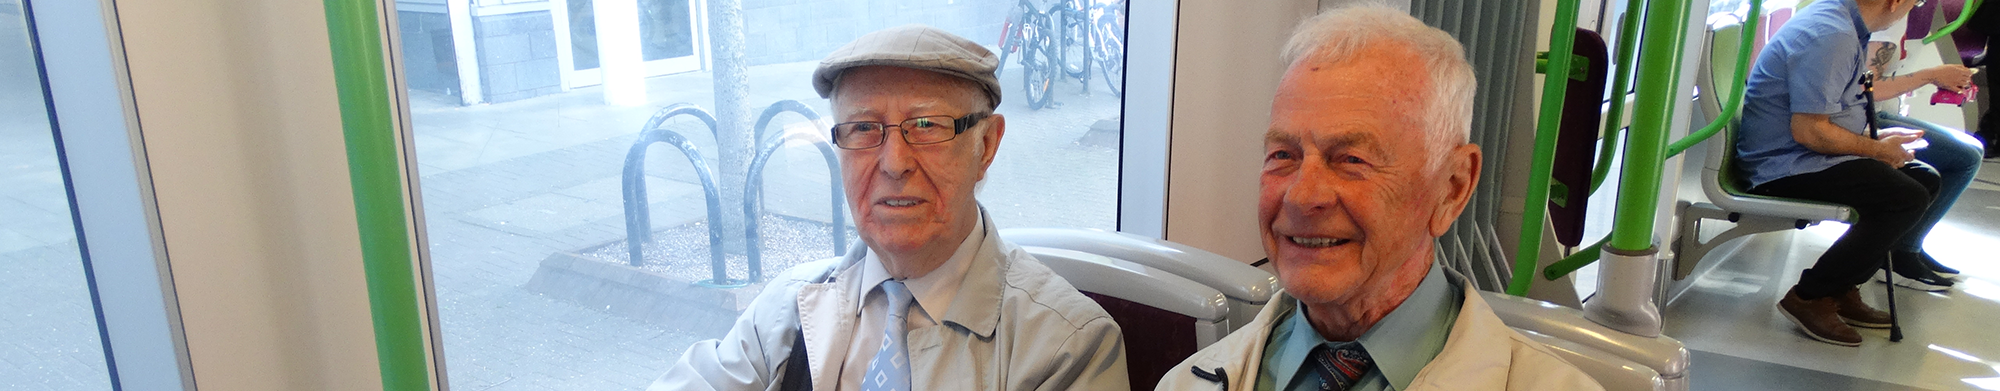 Two elderly men on smiling, sitting on the tram